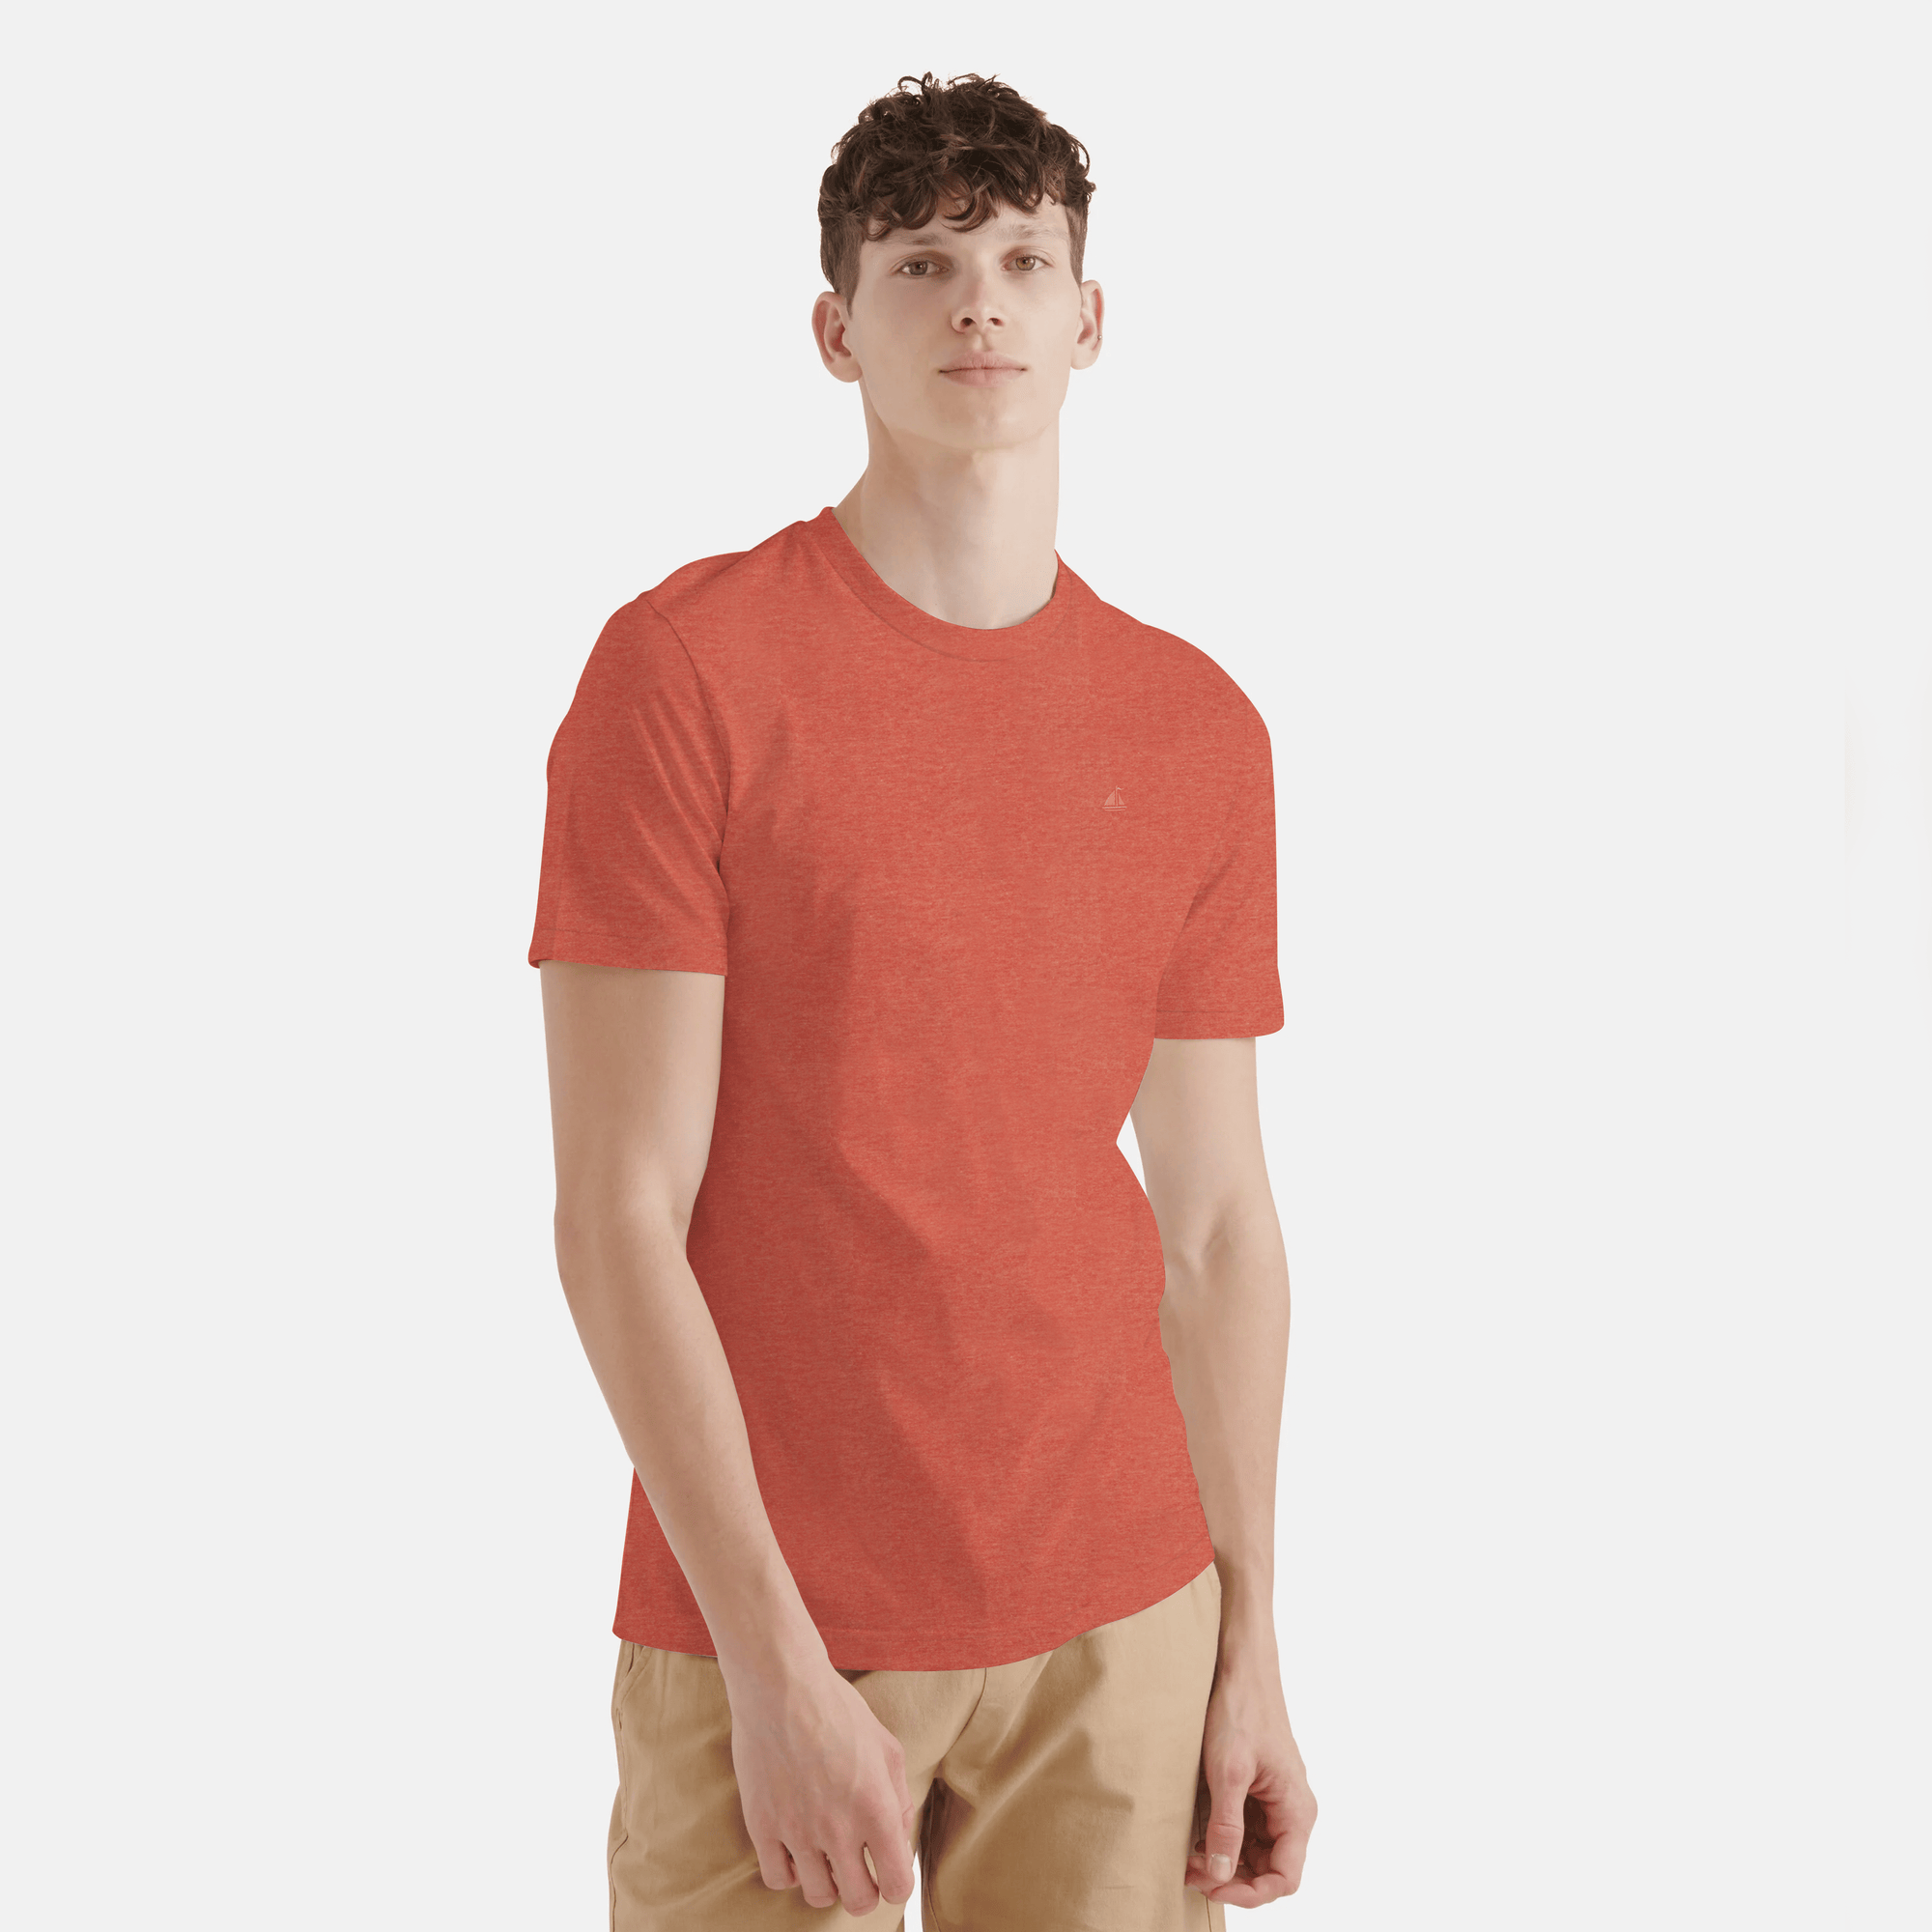 Stone Harbor Men's T-Shirt MEN'S TEXTURED TOMATO RED T-SHIRT